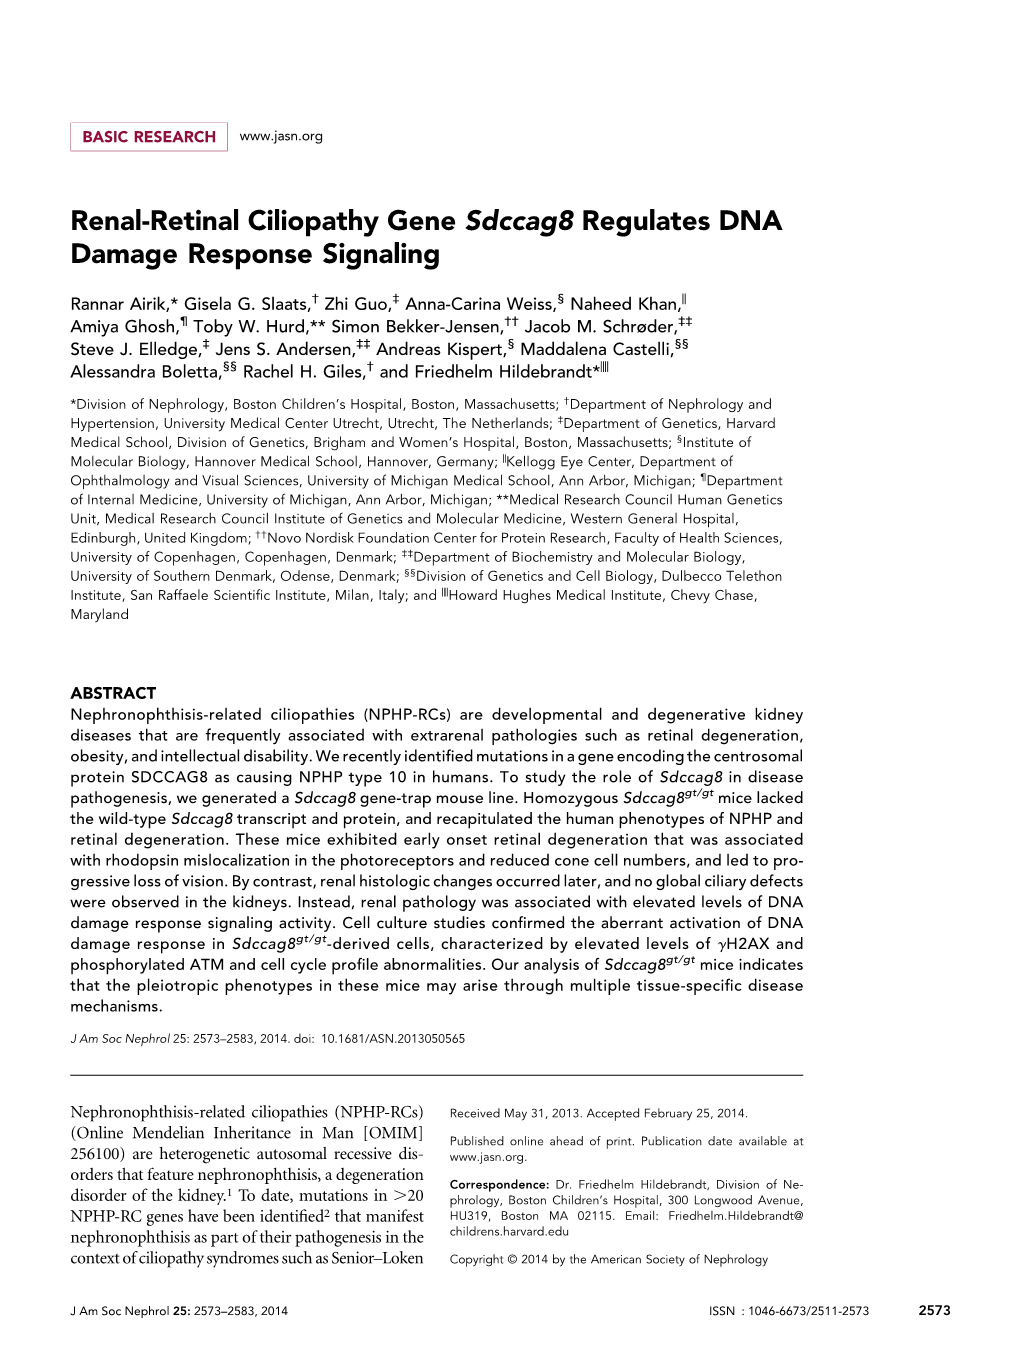 Renal-Retinal Ciliopathy Gene Sdccag8 Regulates DNA Damage Response Signaling